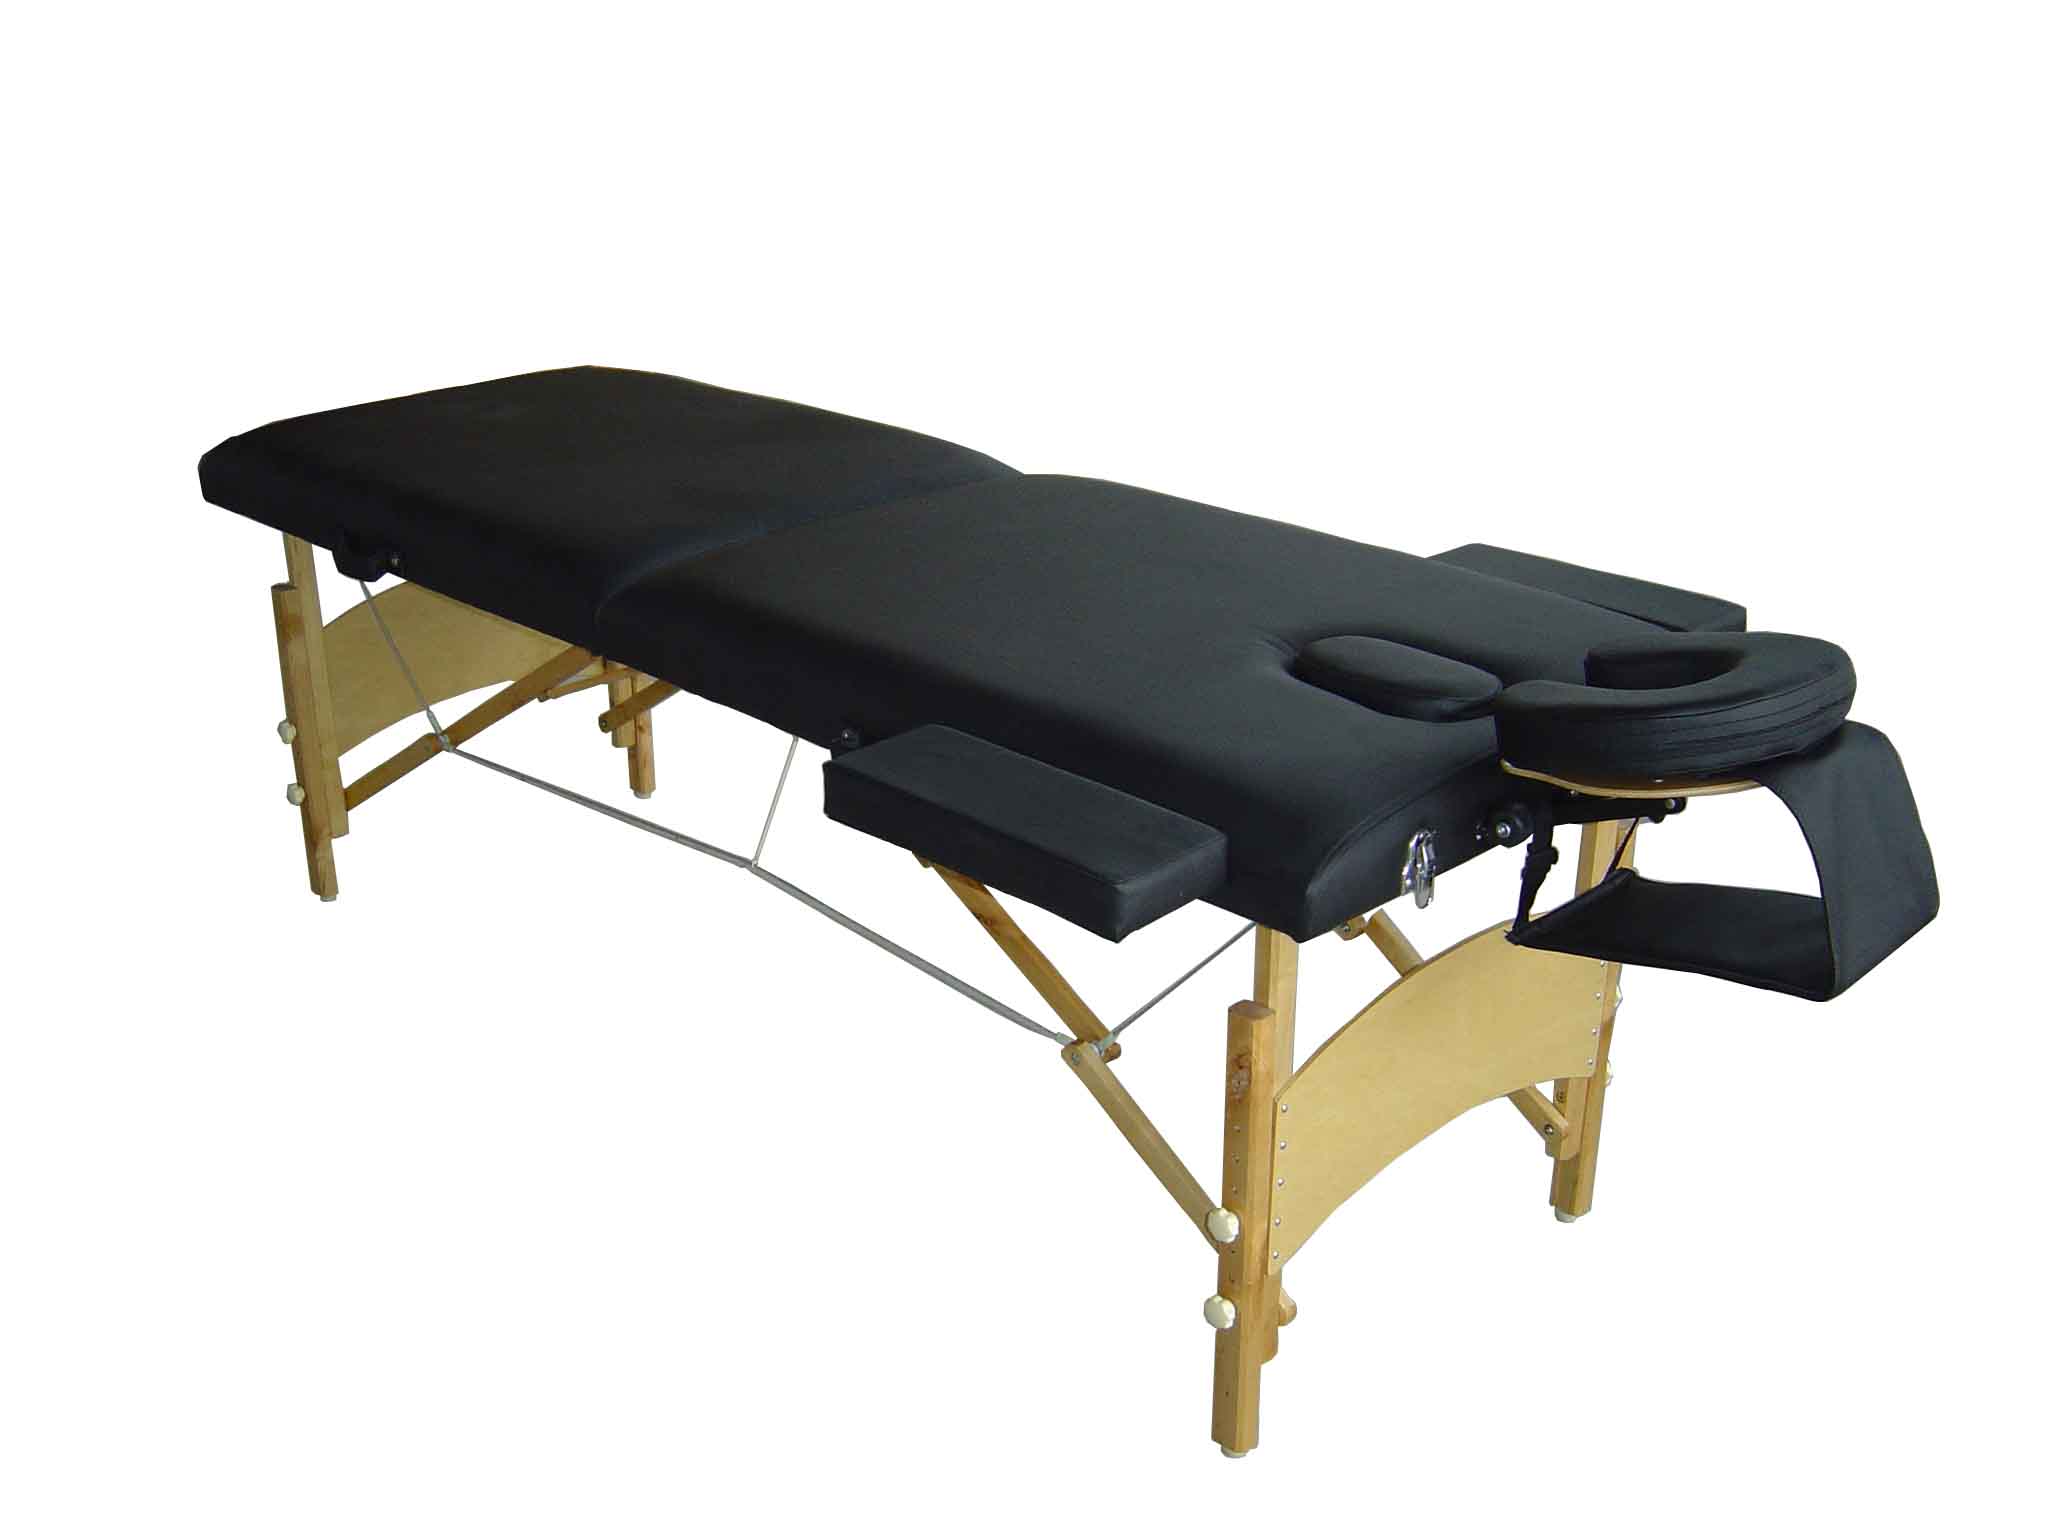  MT-007 Wooden Massage Table (MT-007 Деревянный Массаж таблице)